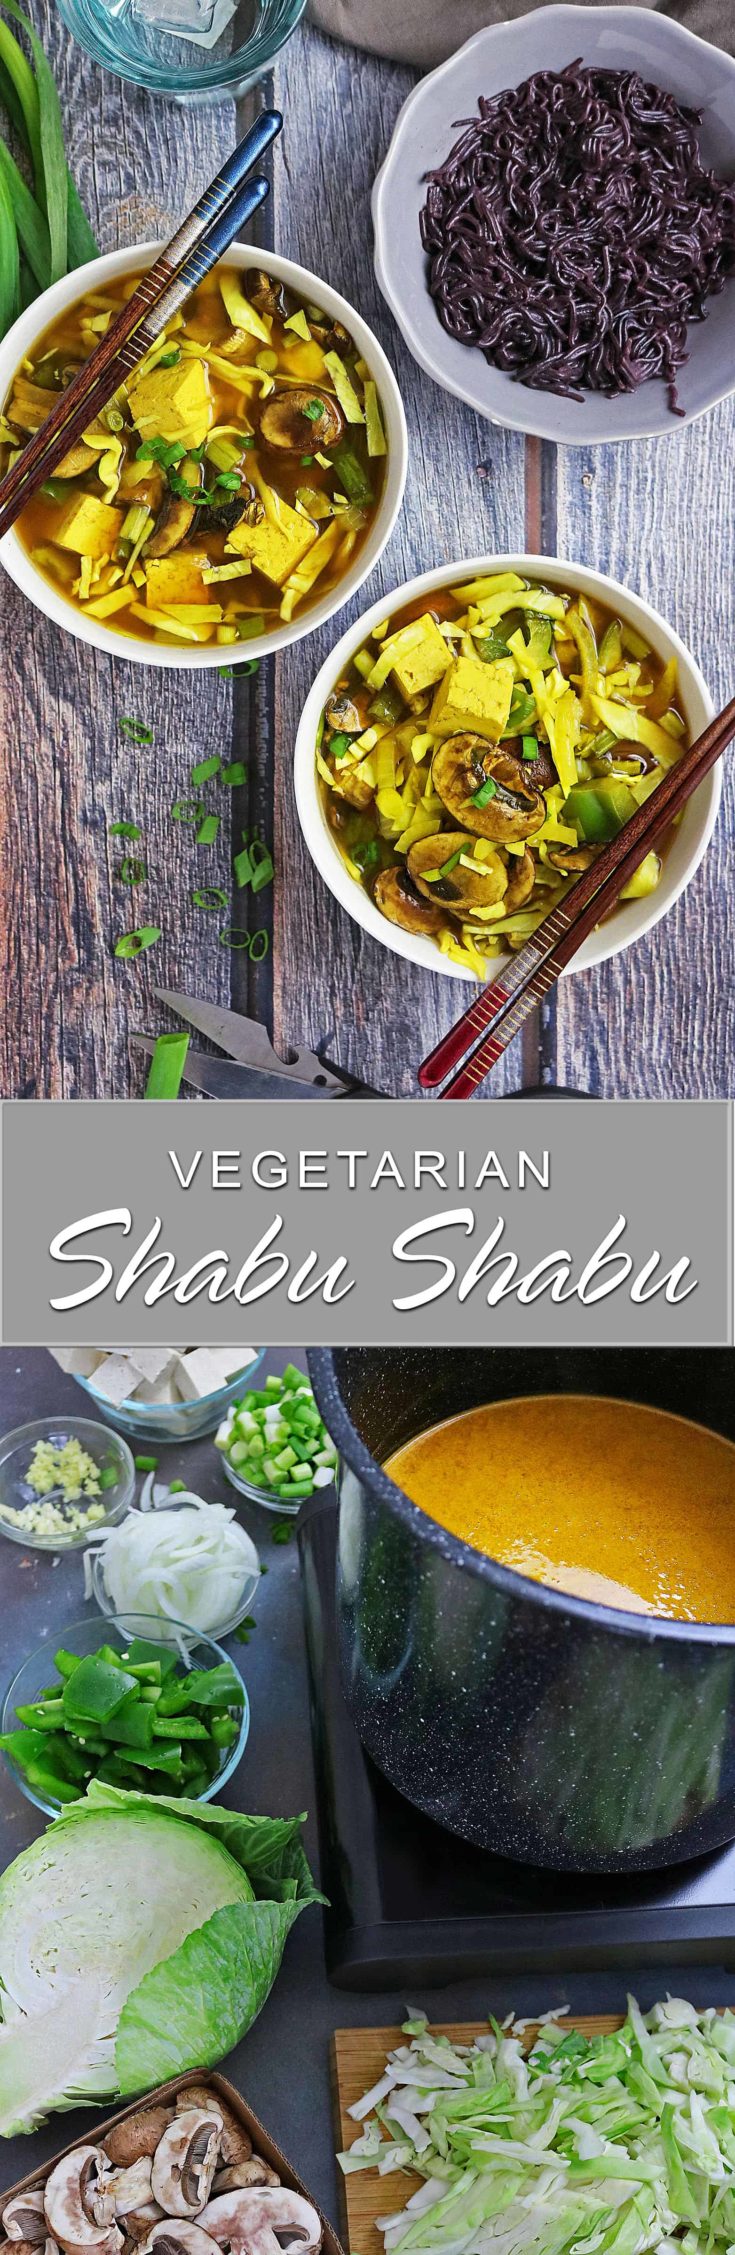 Easy Shabu Shabu Recipe